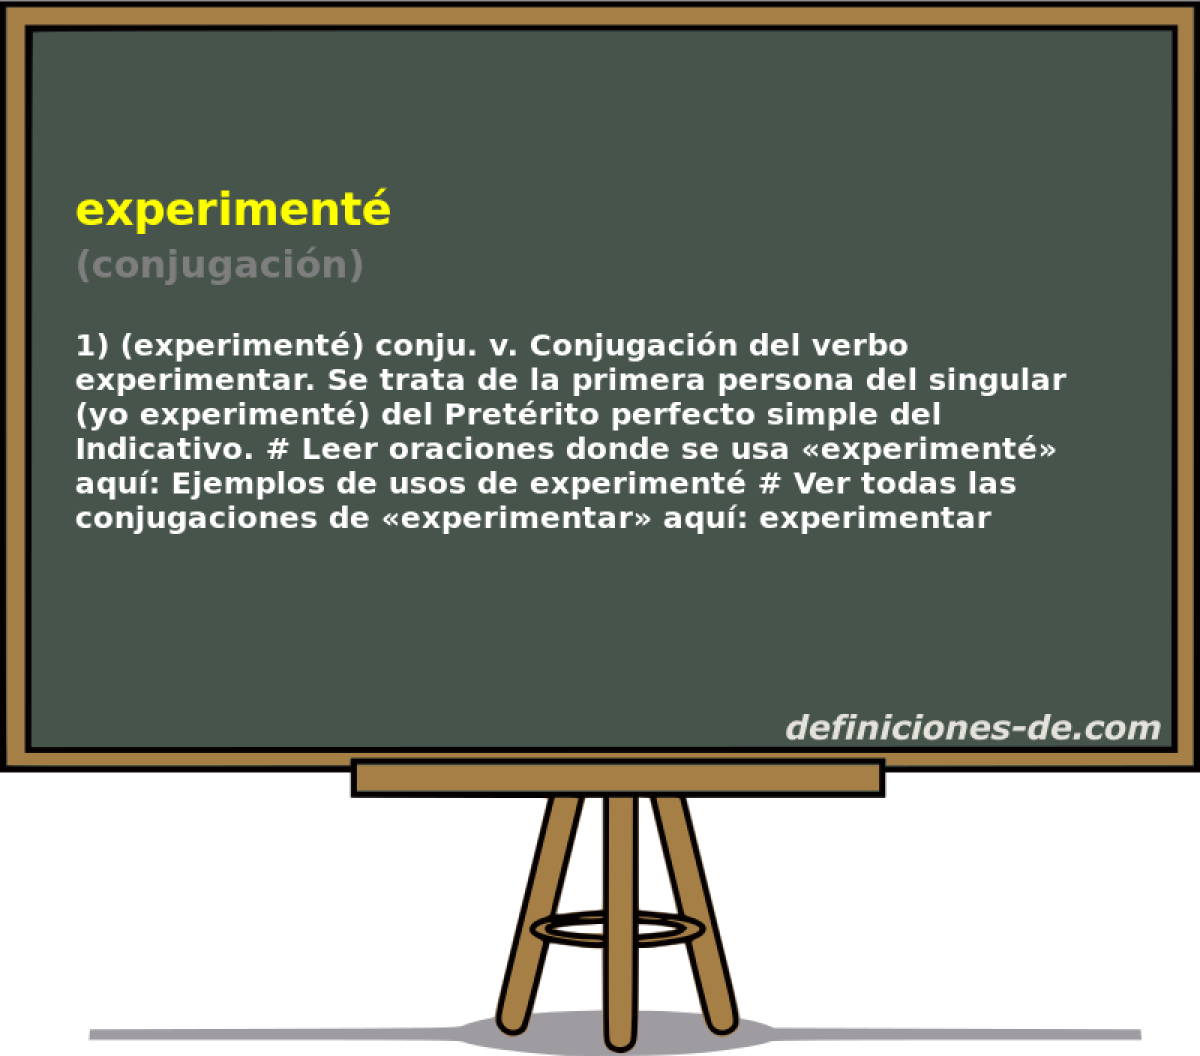 experiment (conjugacin)